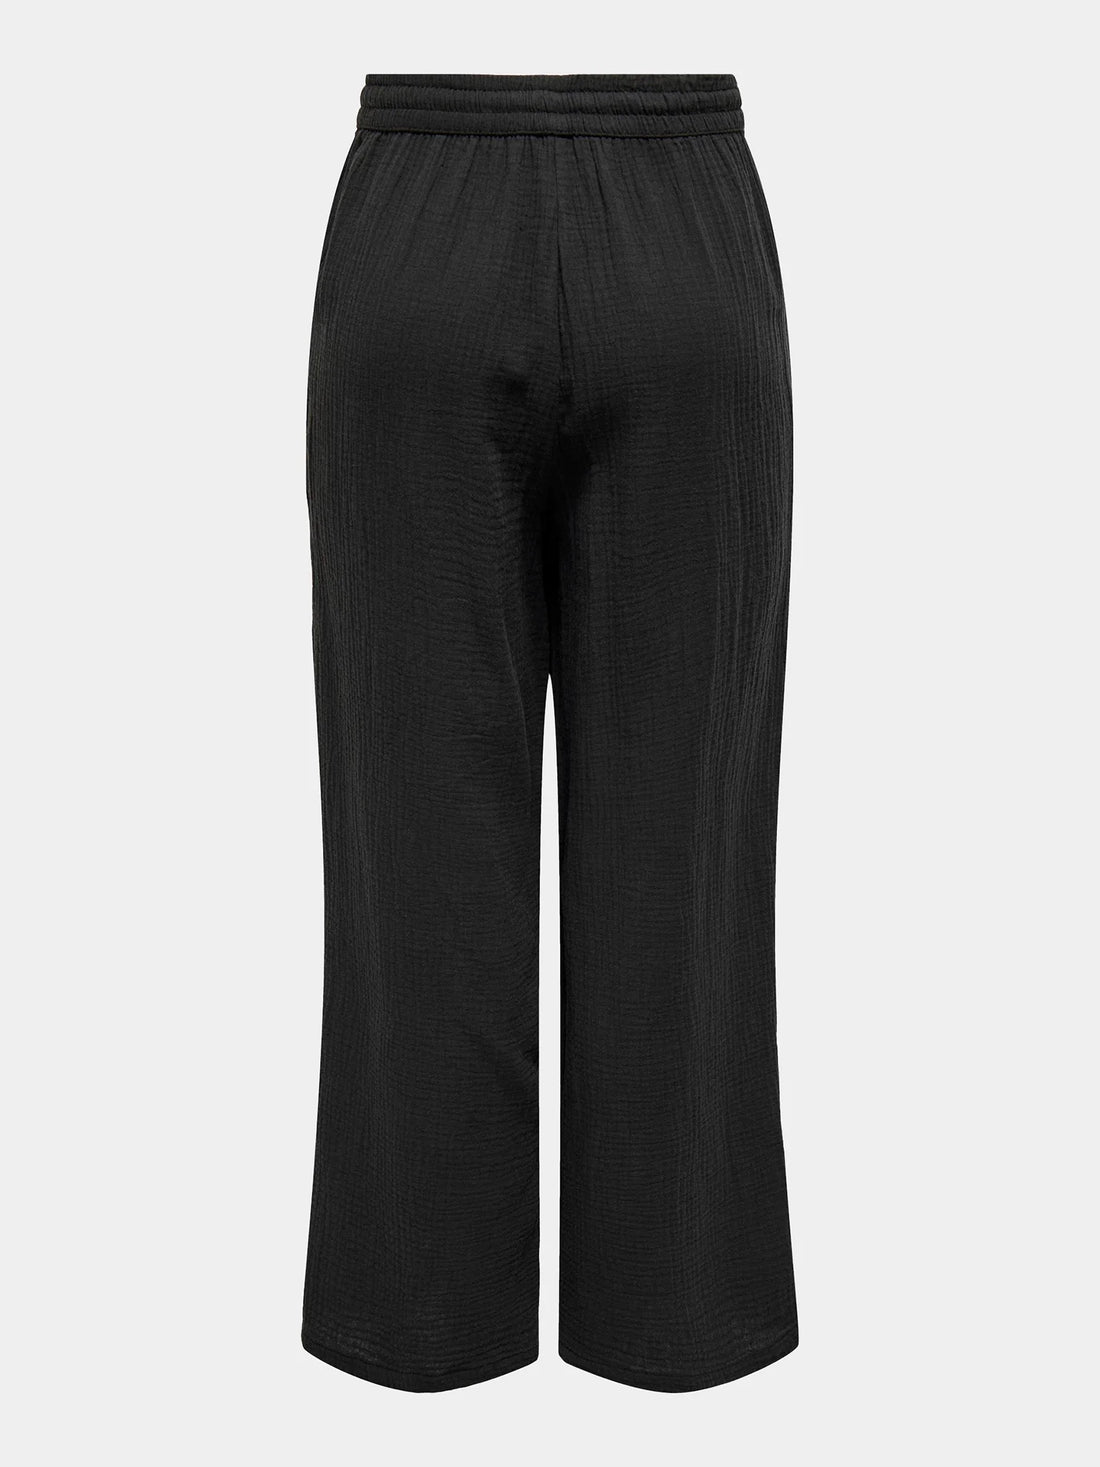 THYRA Crepe Casual Trousers in Black